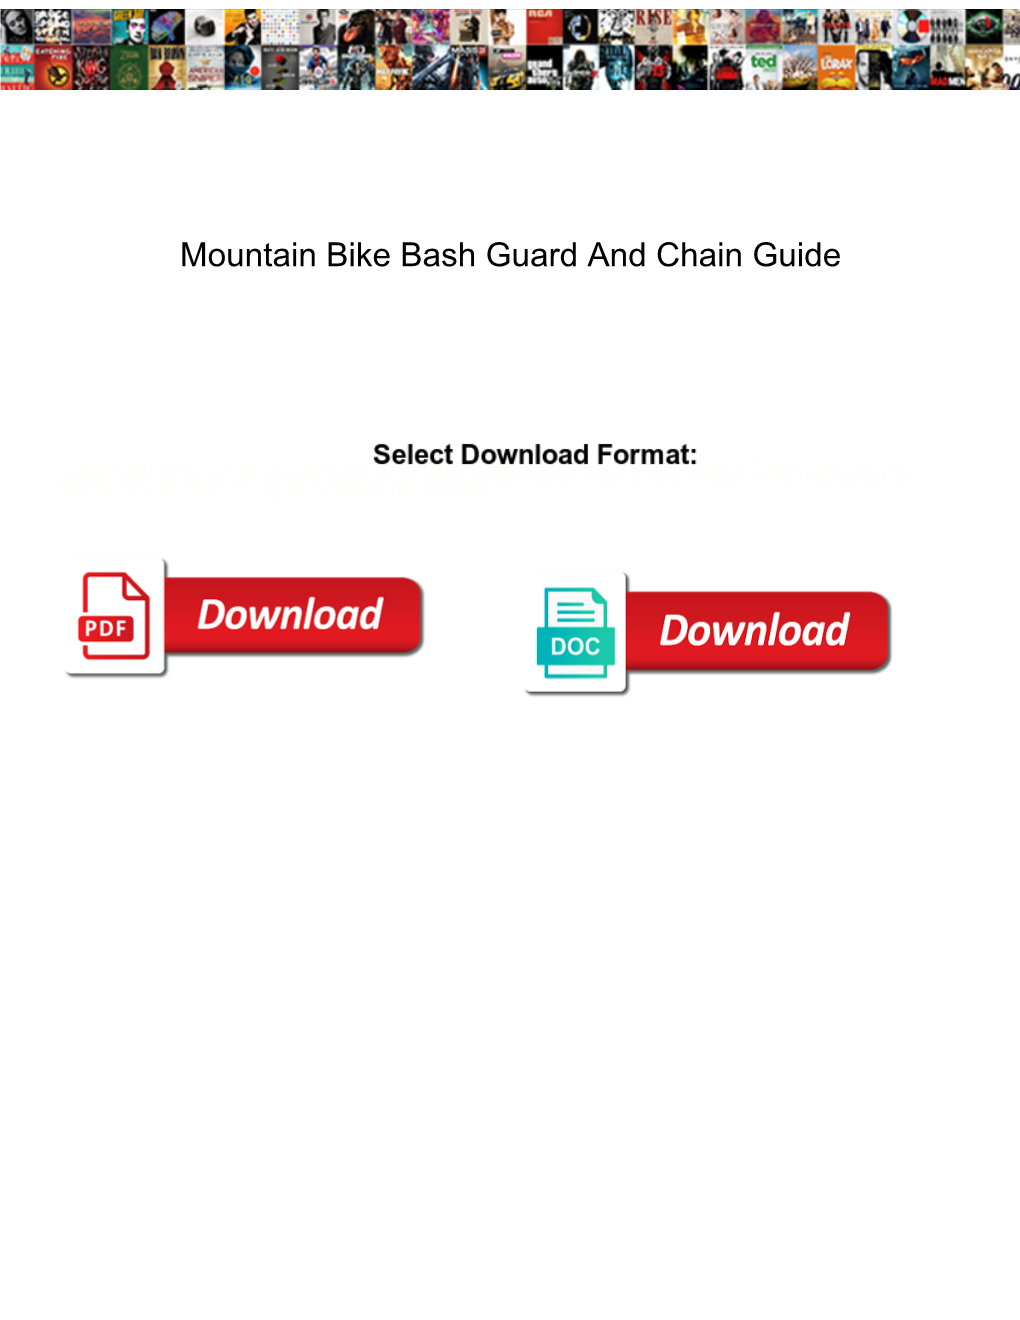 Mountain Bike Bash Guard and Chain Guide